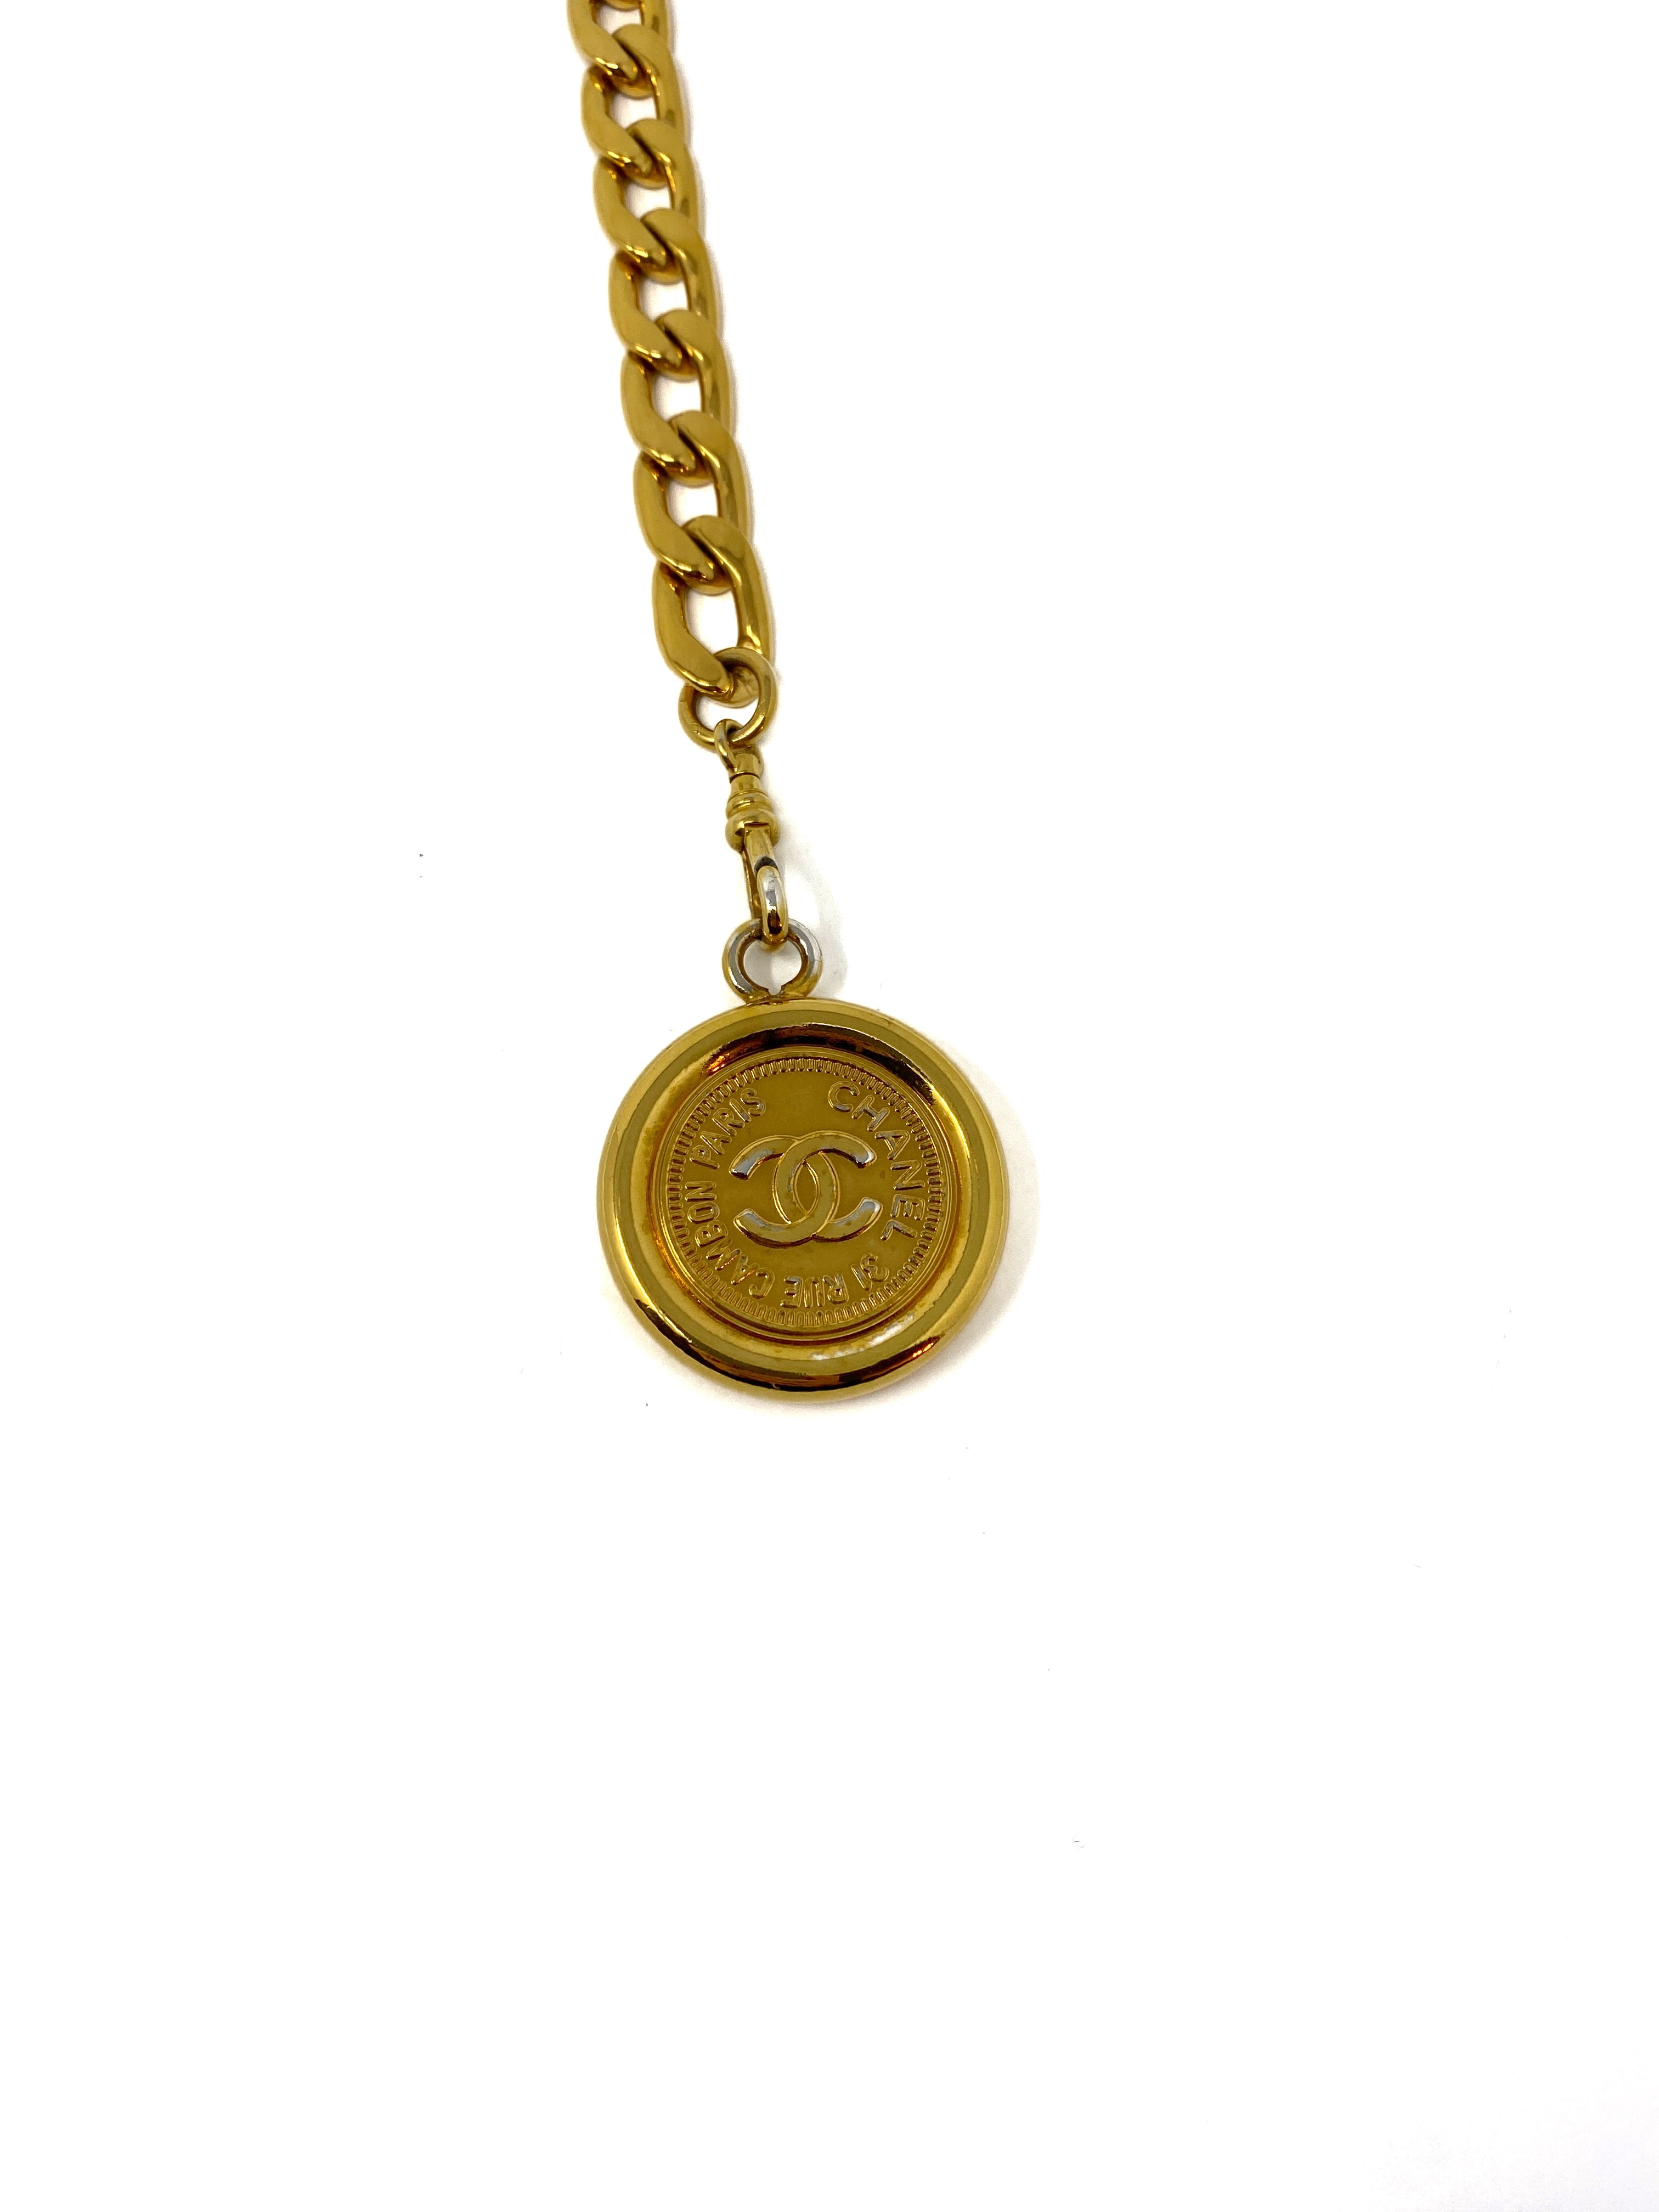 Chanel gold chain belt, 90s